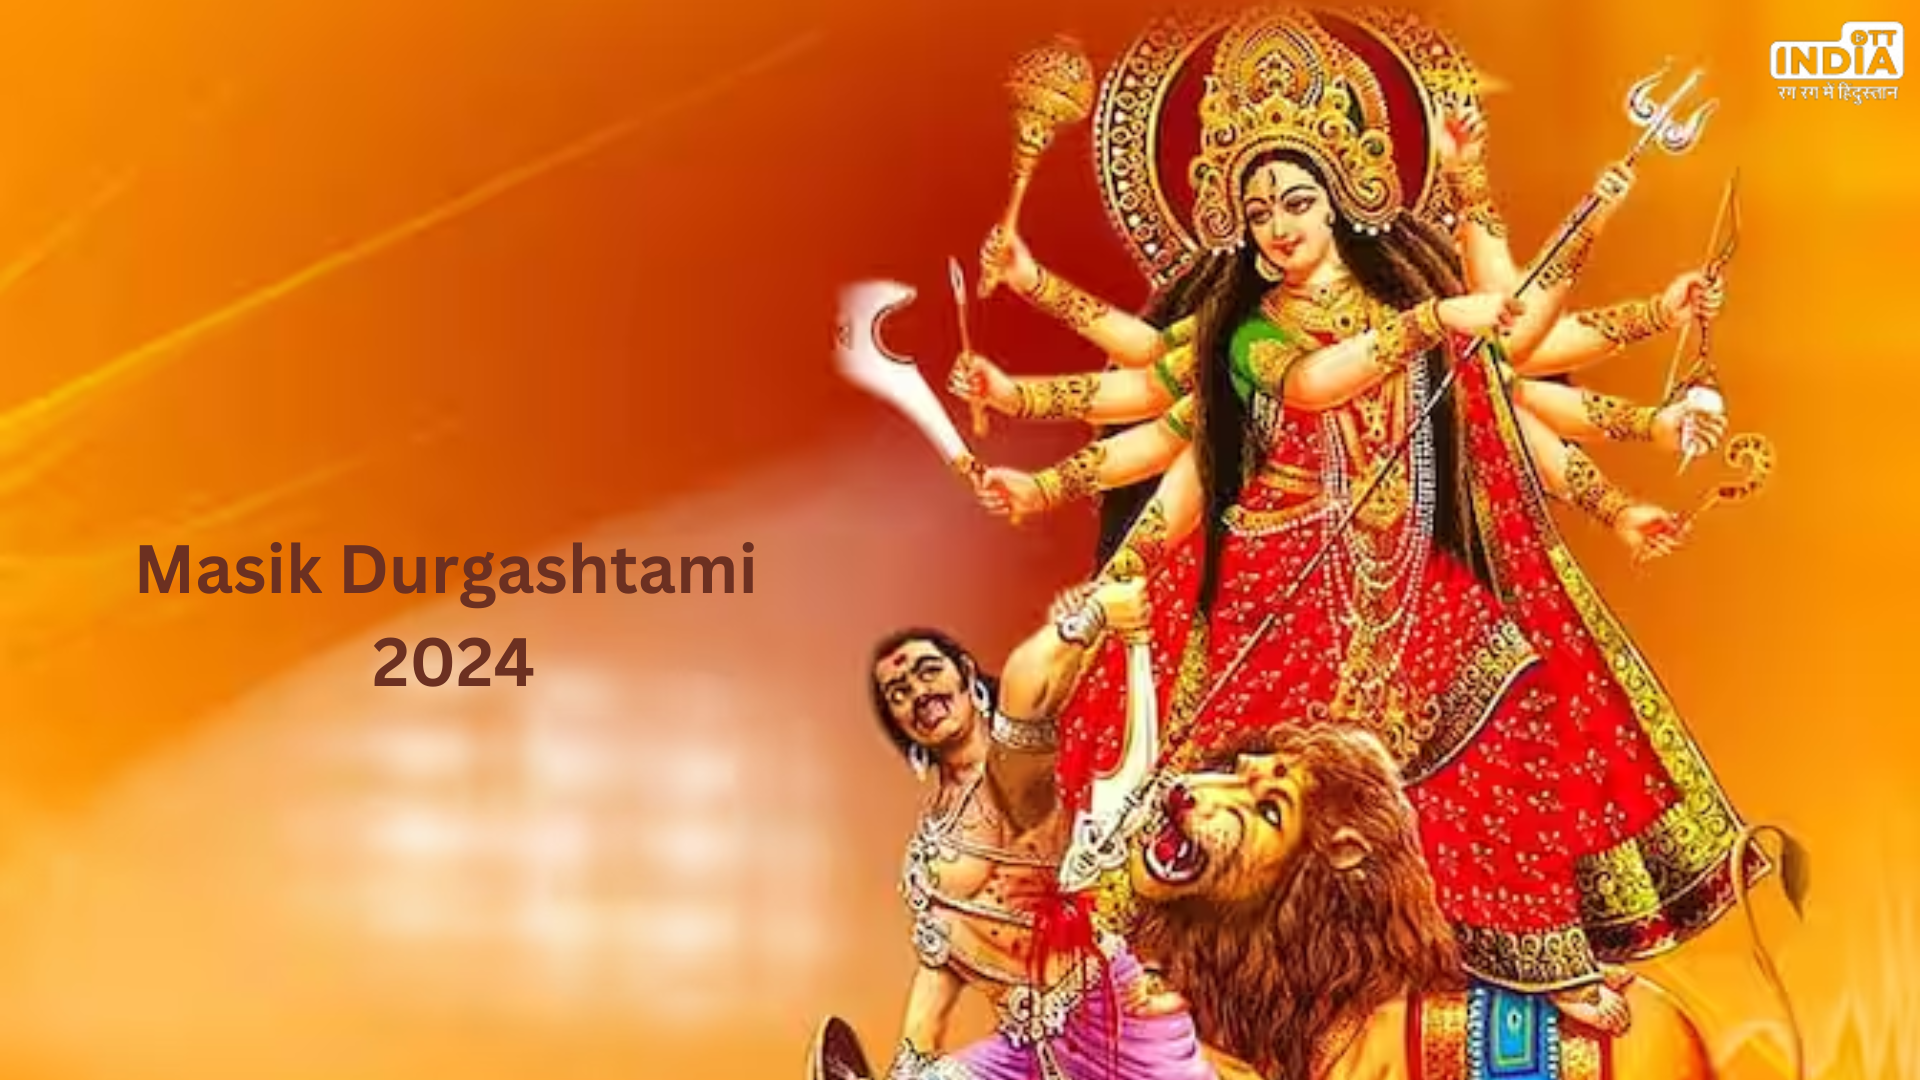 Masik Durgashtami 2024: कल मनाई जाएगी दुर्गाष्टमी, जानें इसका महत्व